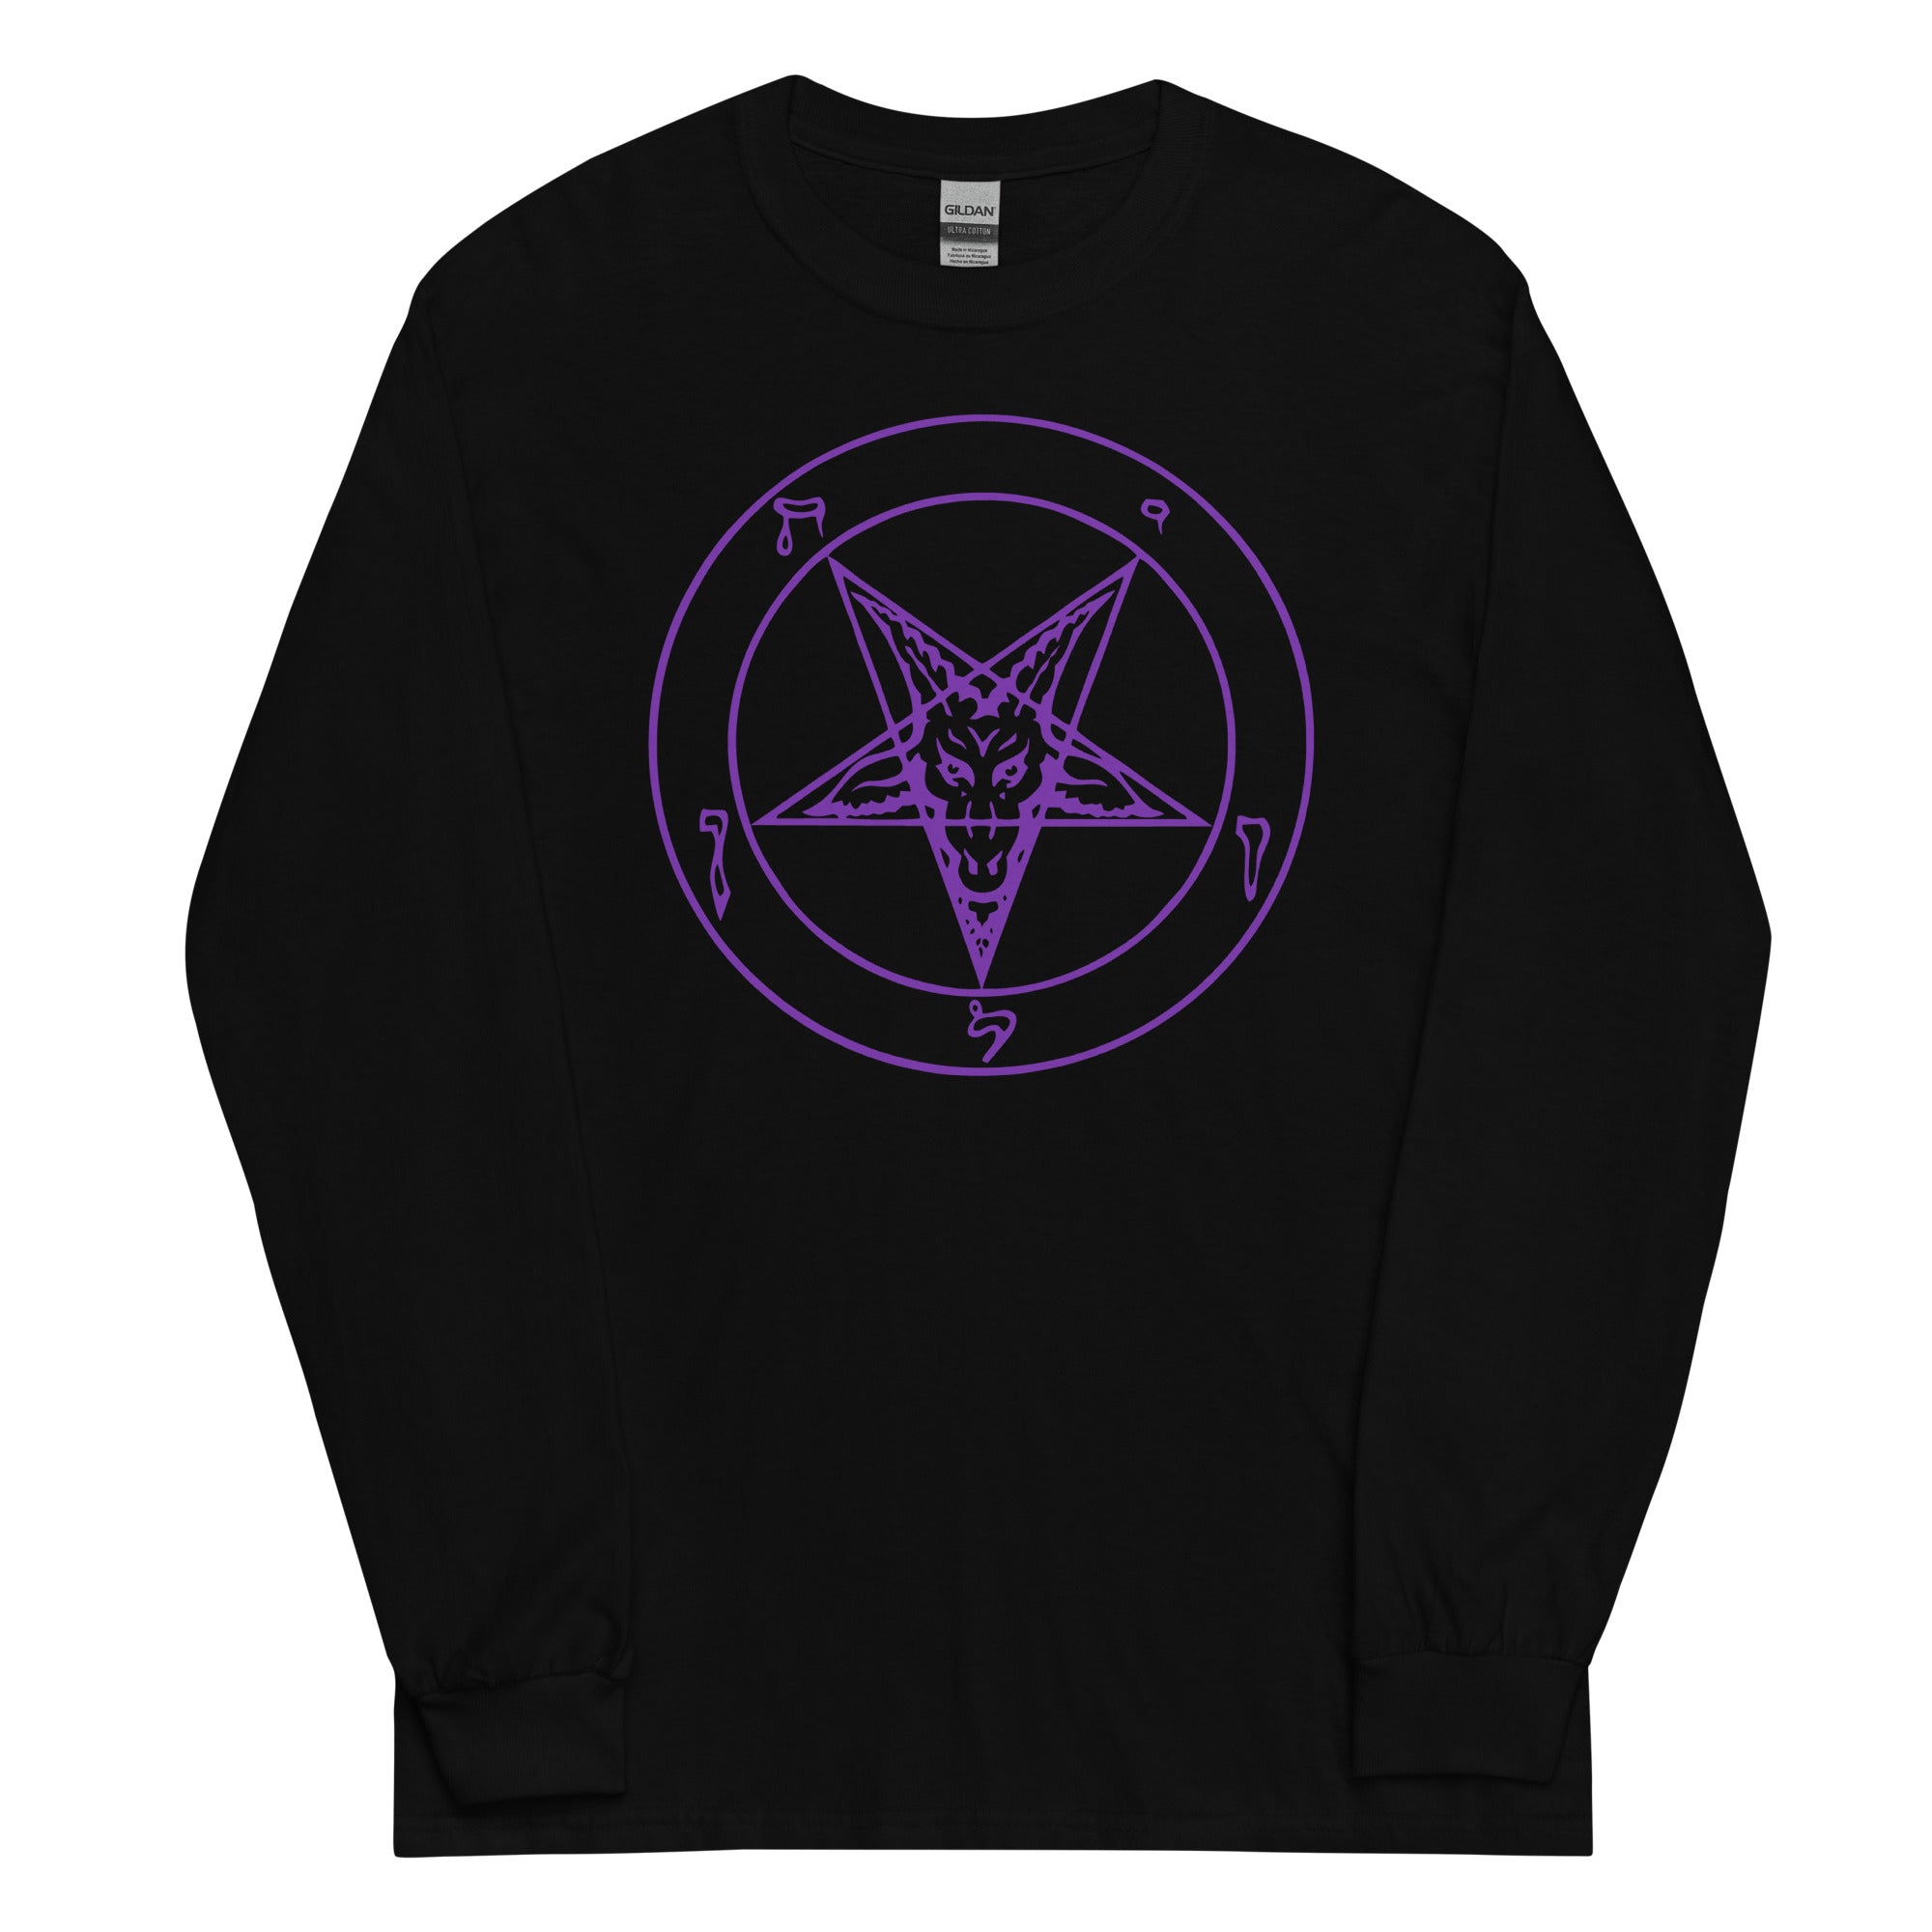 Sigil of Baphomet Insignia of Satan Men’s Long Sleeve Shirt Purple Print - Edge of Life Designs